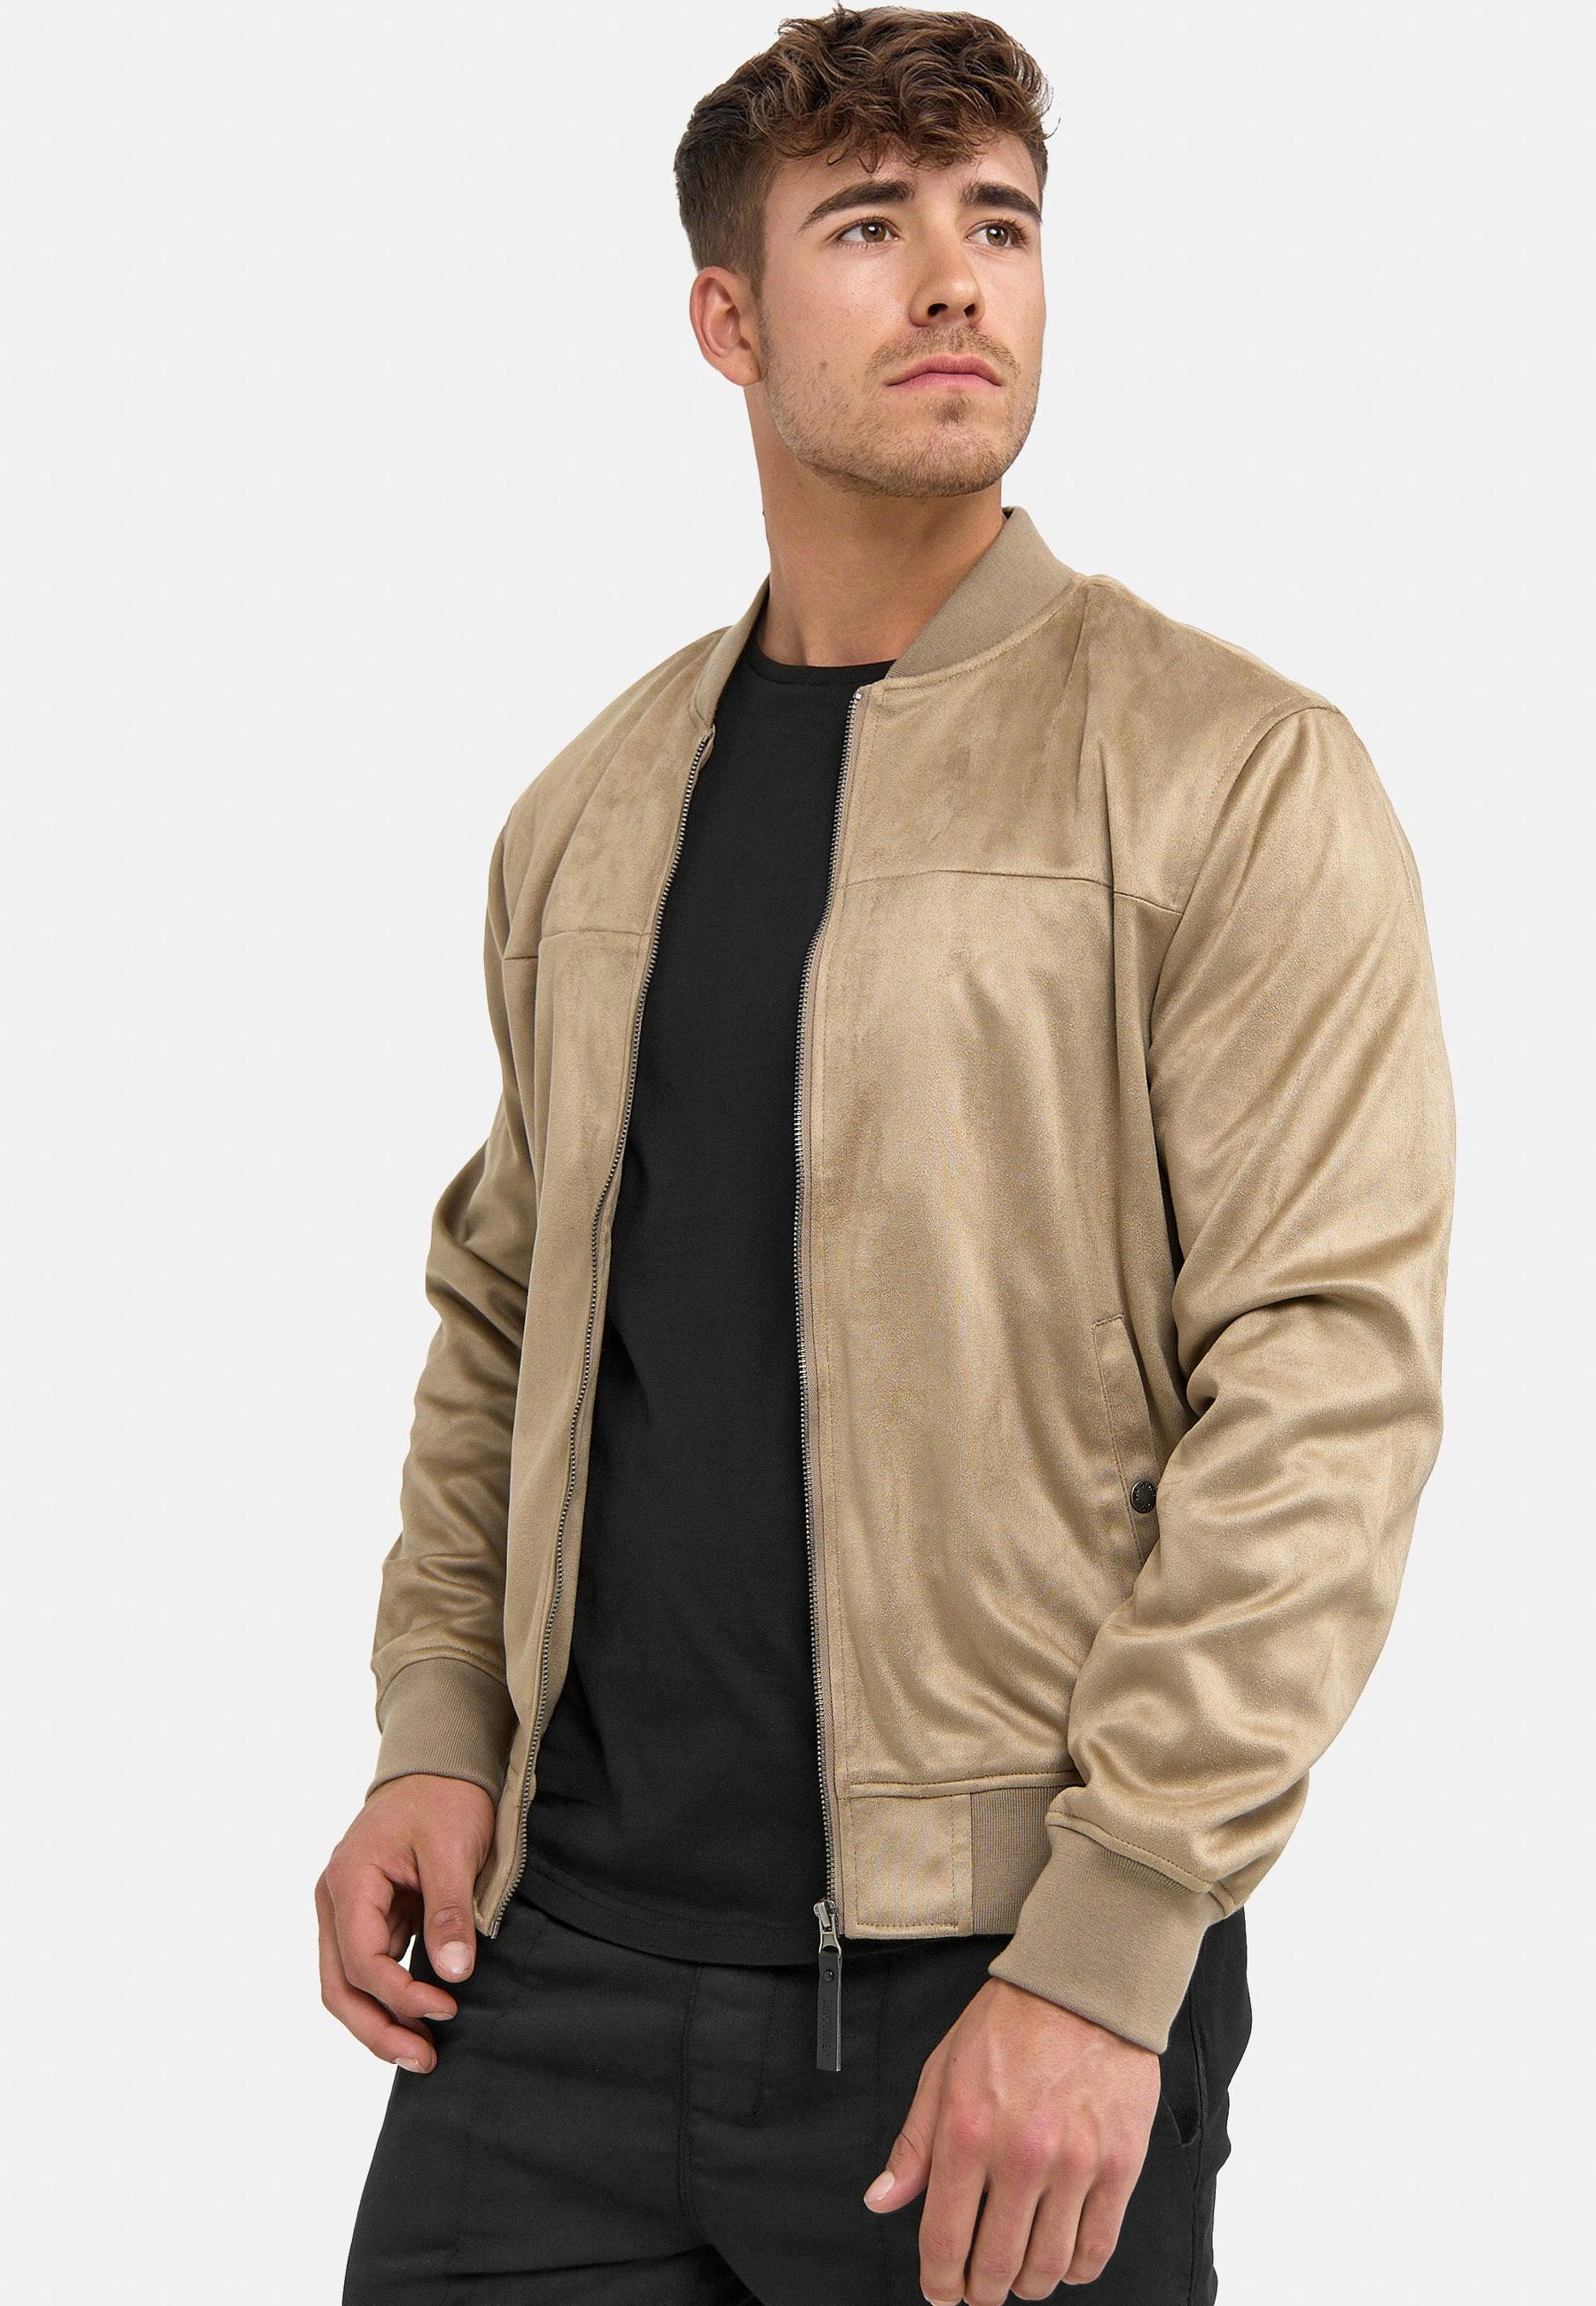 KP Fashion Man Faux Leather Jacket Men's Size M - Brown Gray Sherpa Lined |  eBay